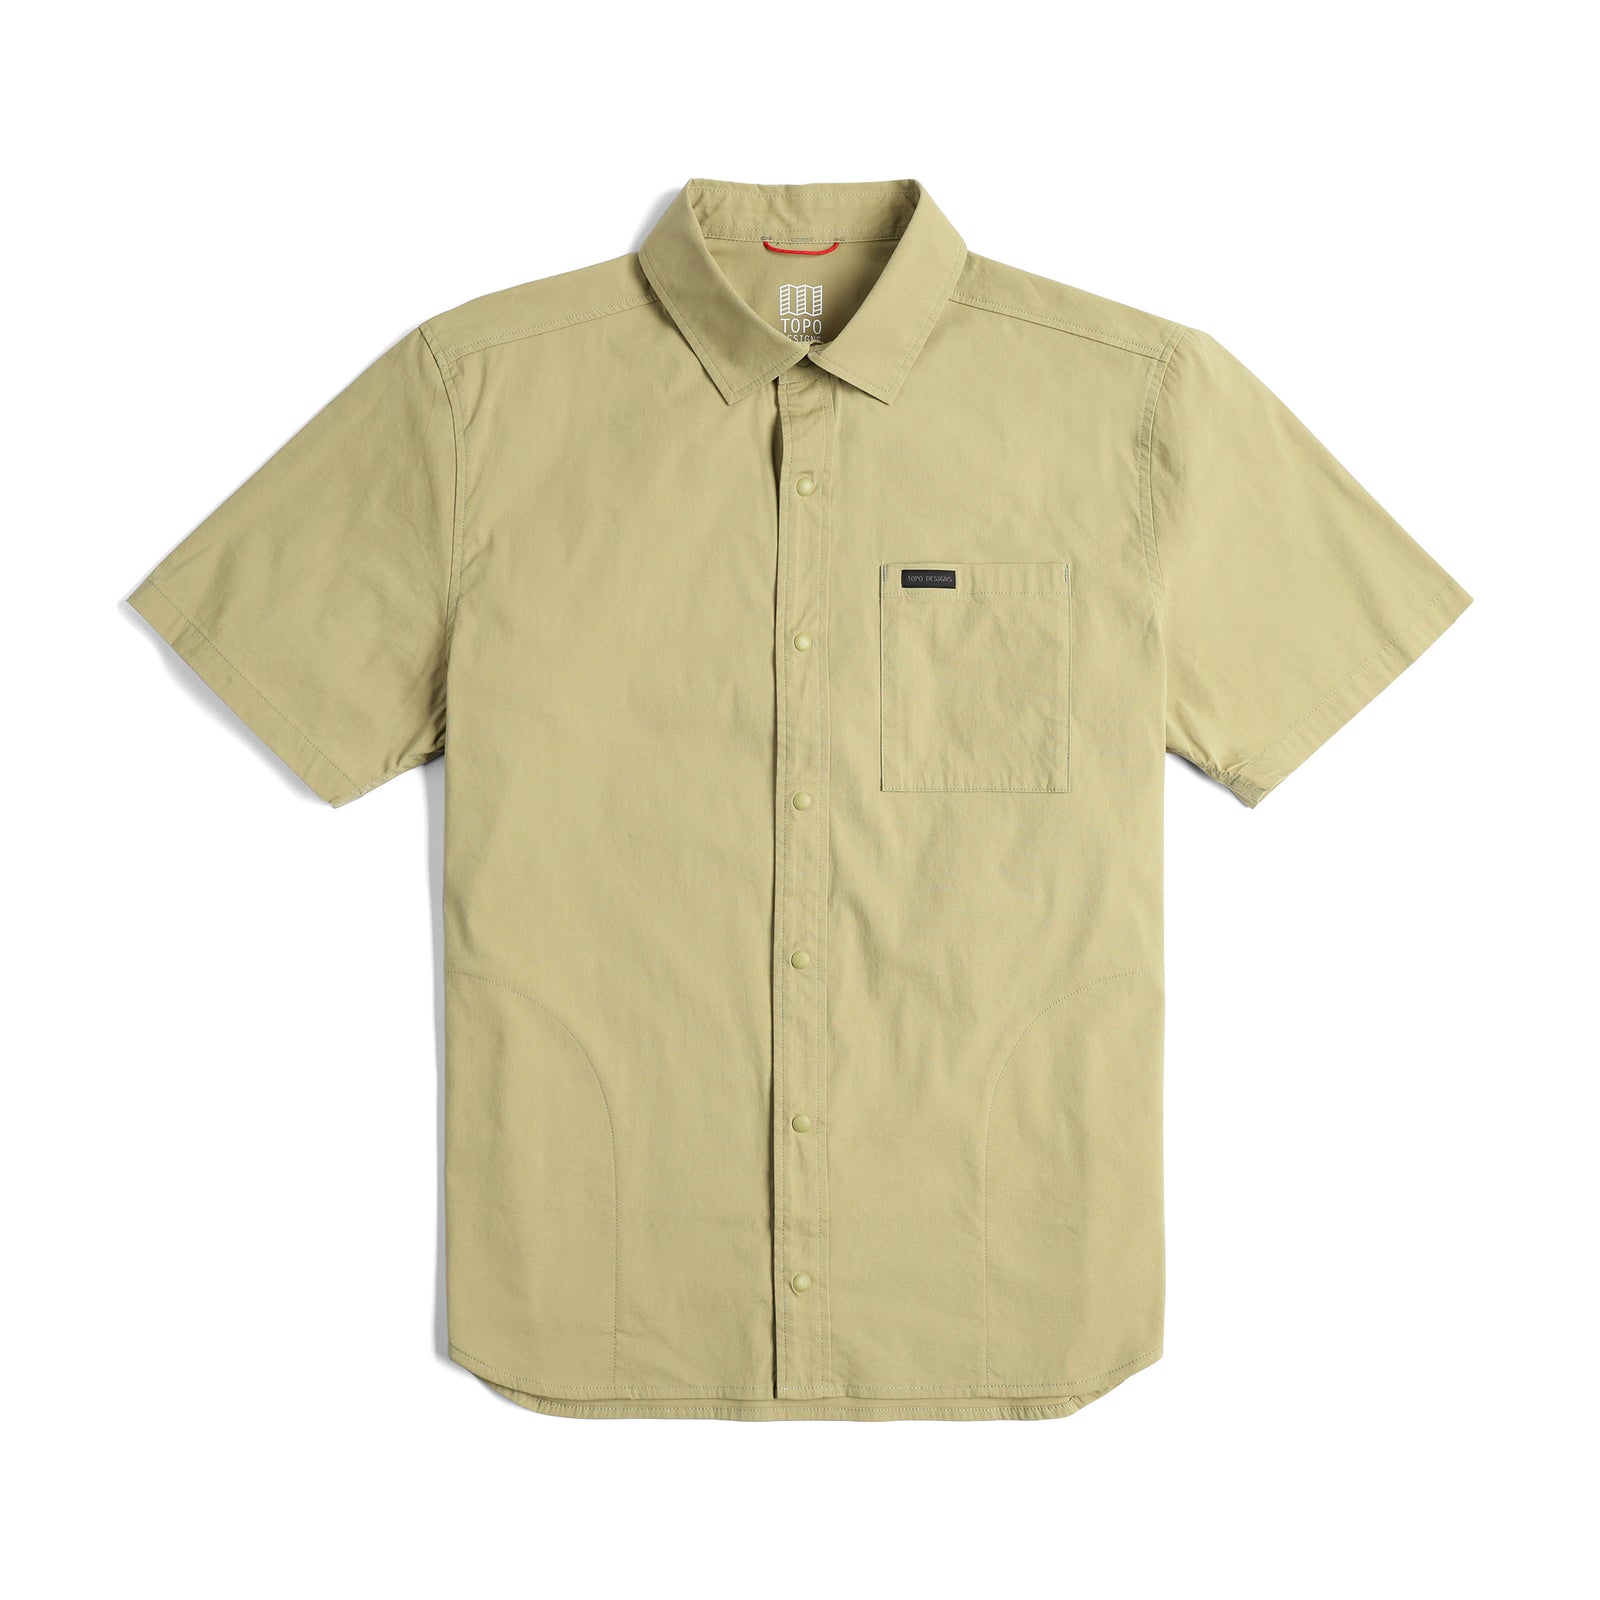 Topo Designs Global Shirt - Short Sleeve - Men's in "Moss"